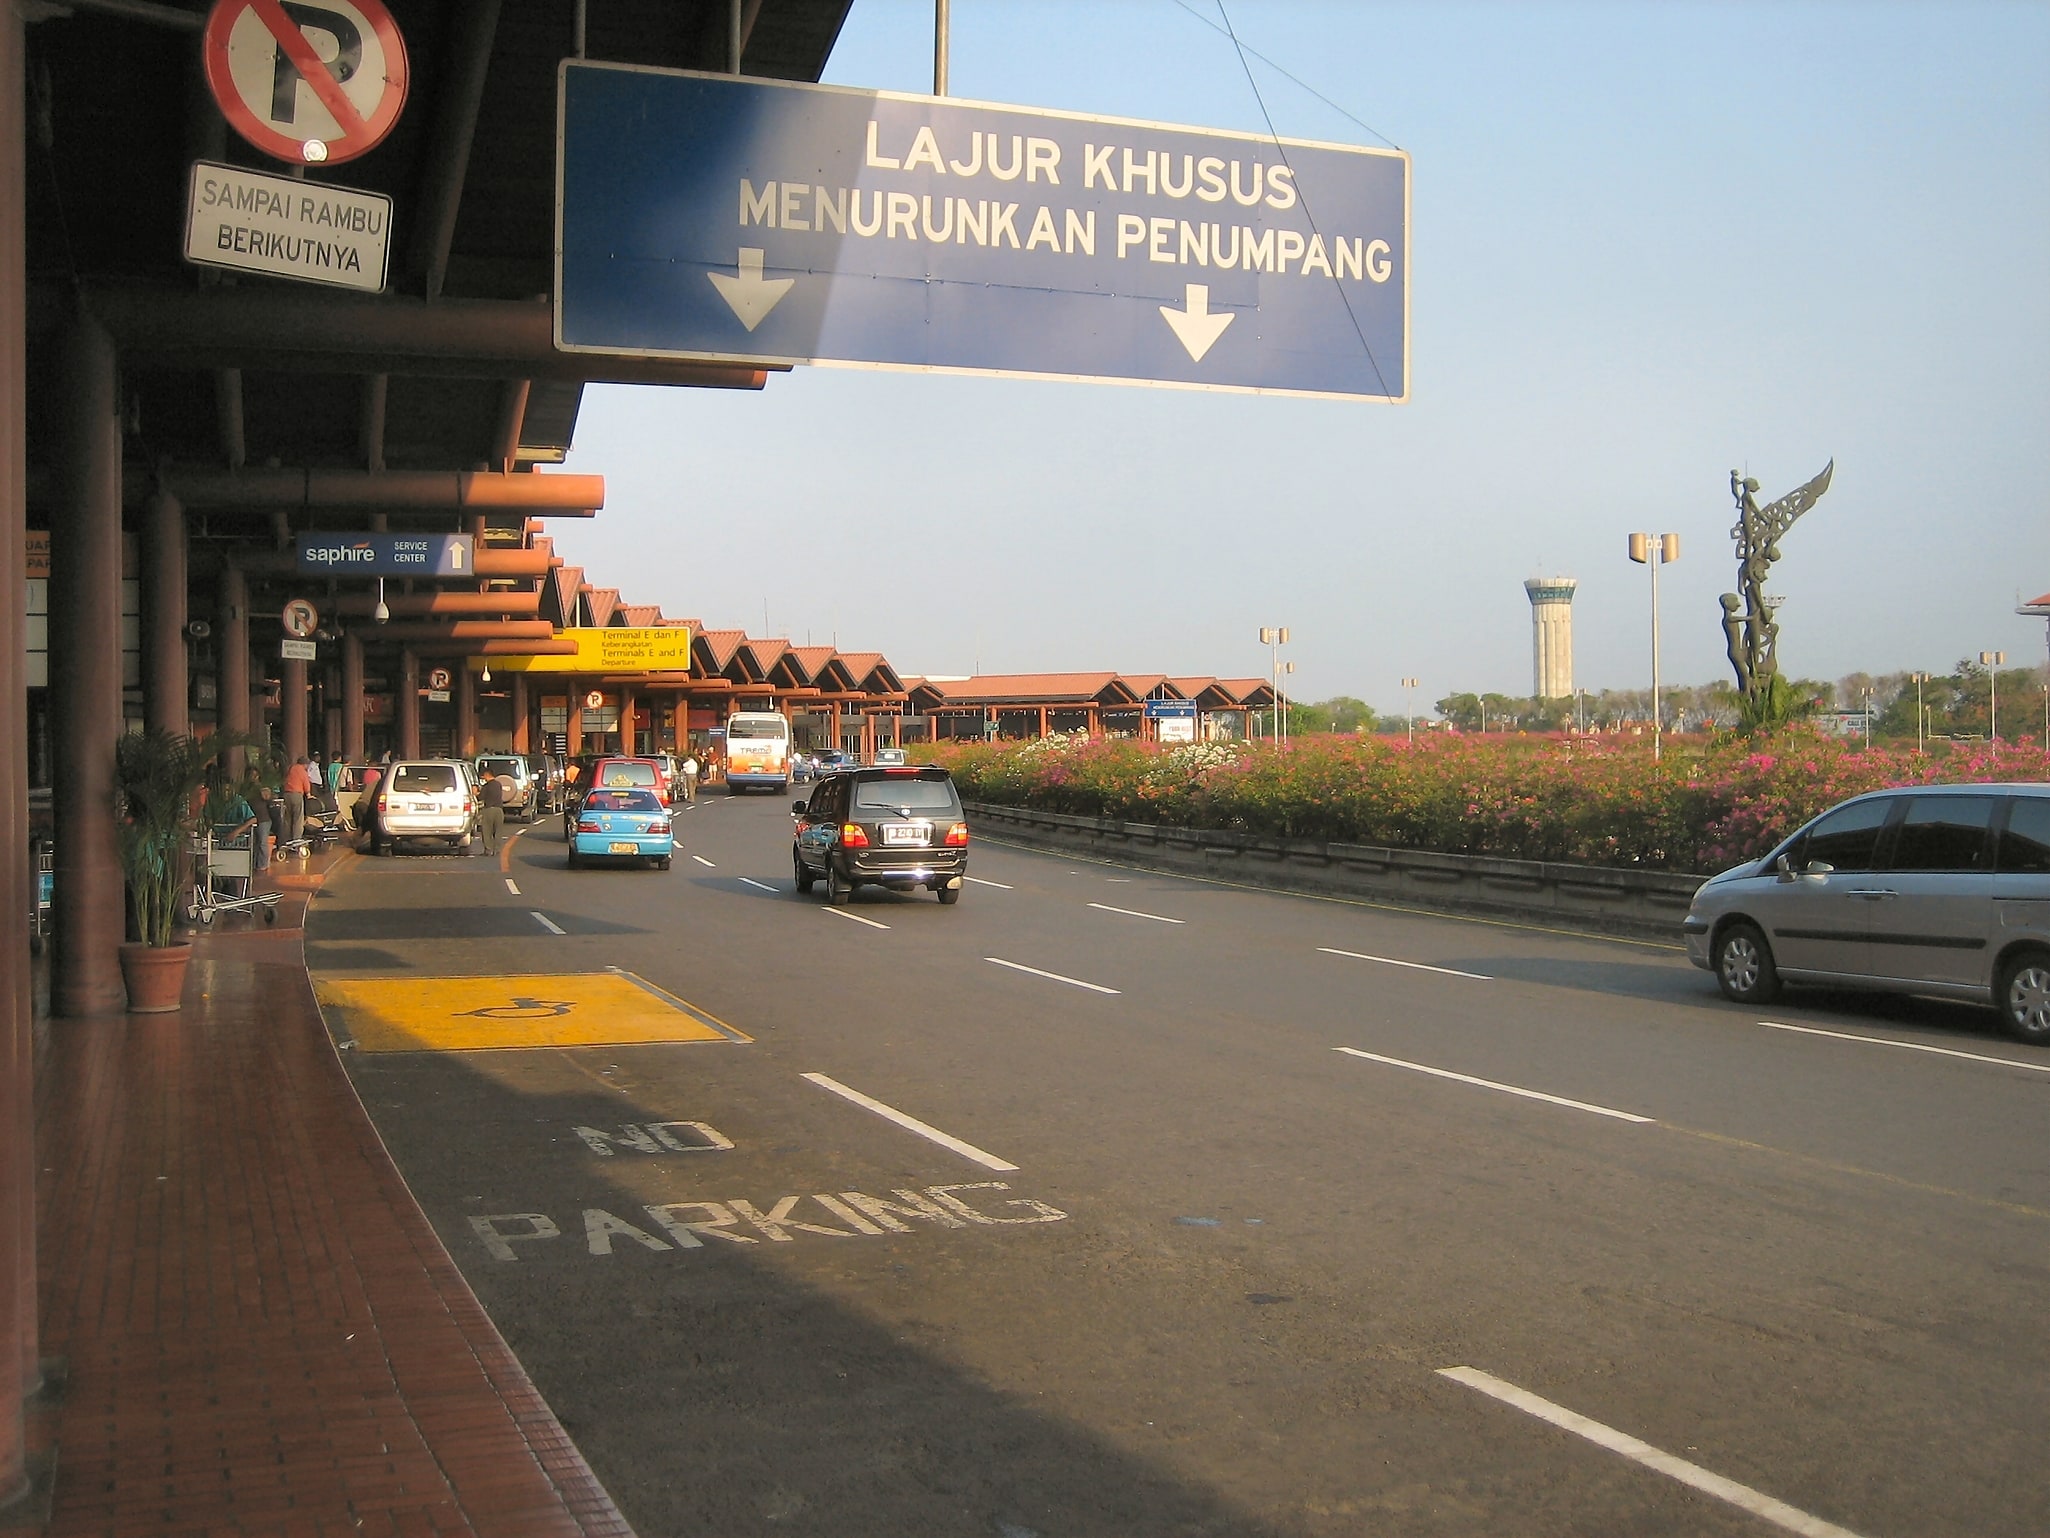 Tangerang, Indonesia